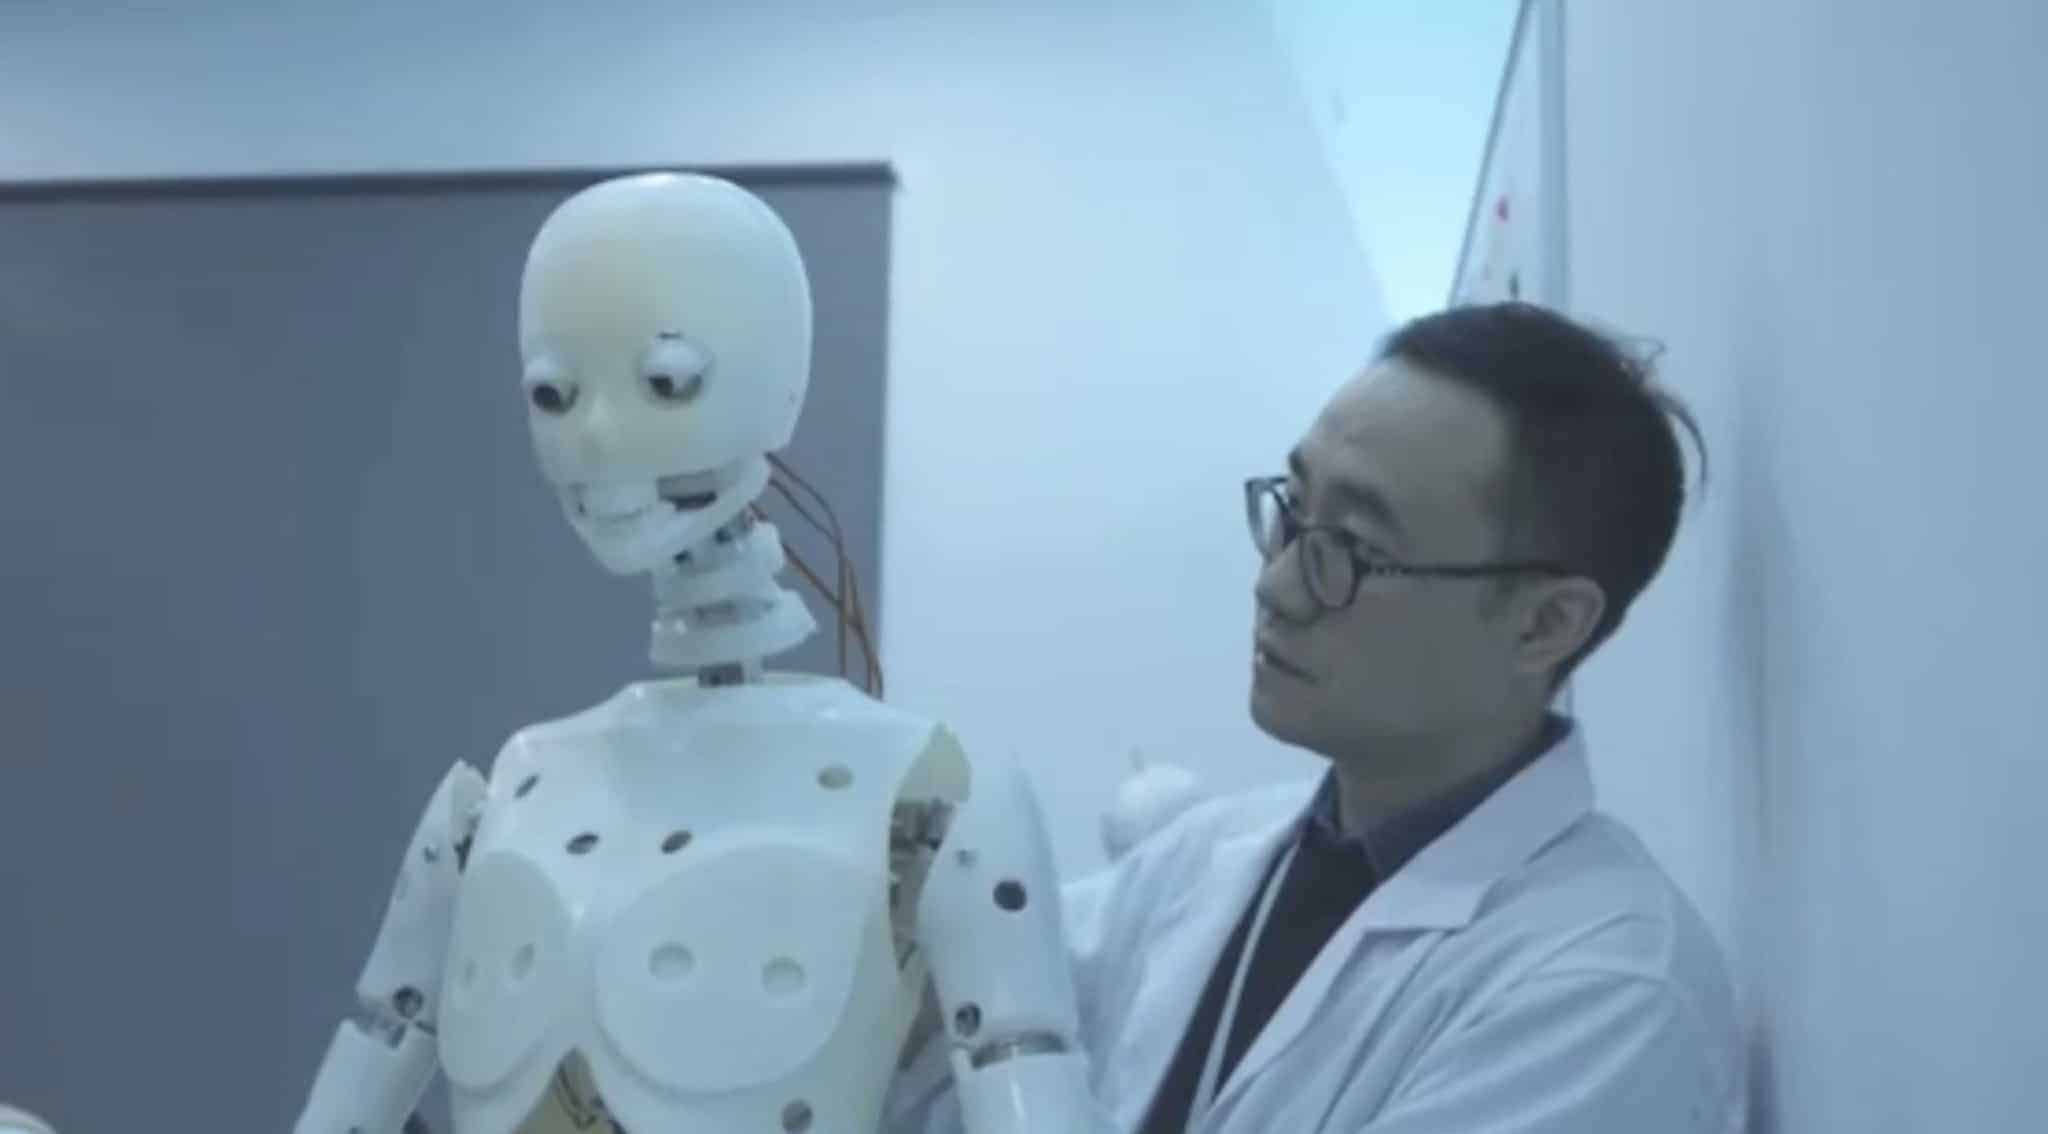 DS Doll Robotics Robotic Skeleton